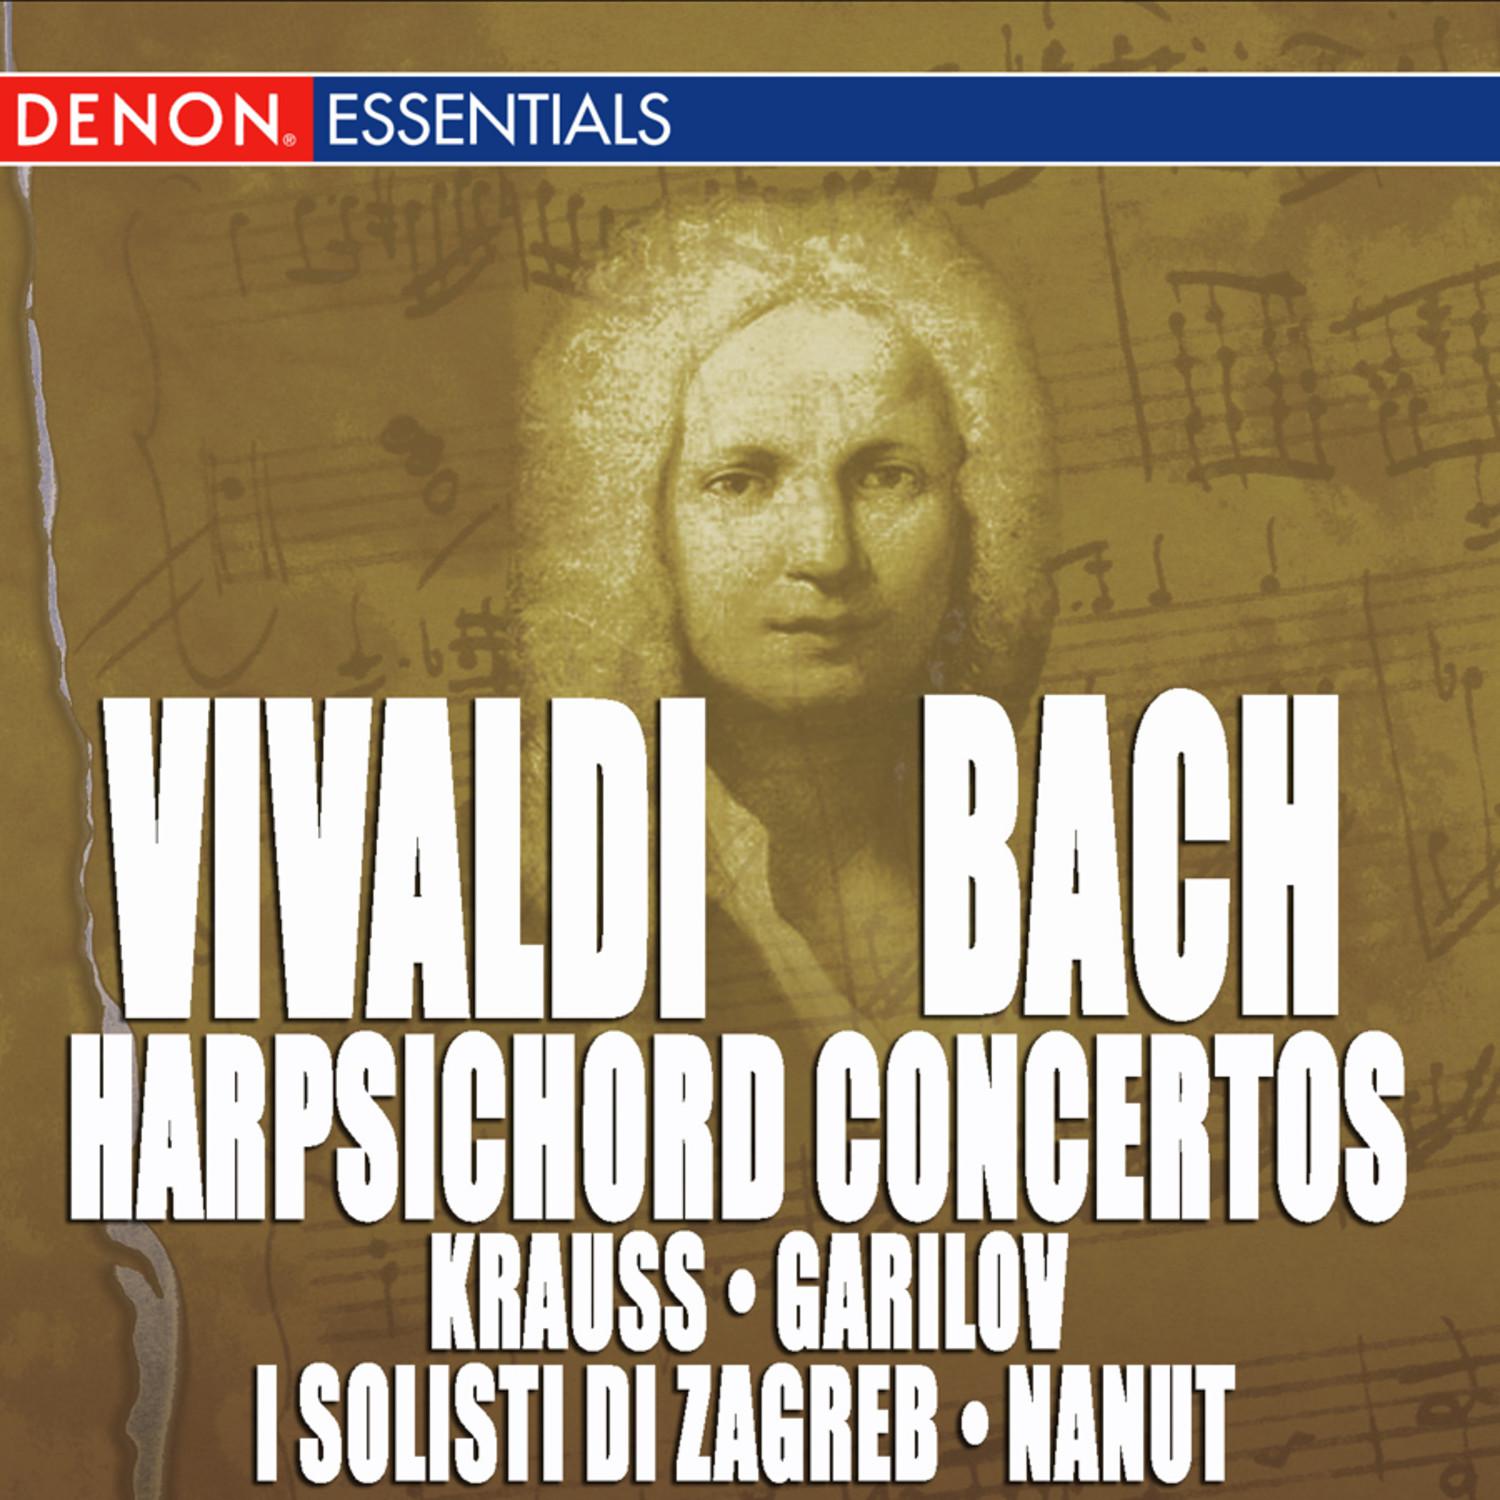 Concerto for Harpsichord and Orchestra in D Minor, BWV 1052: II. Adagio